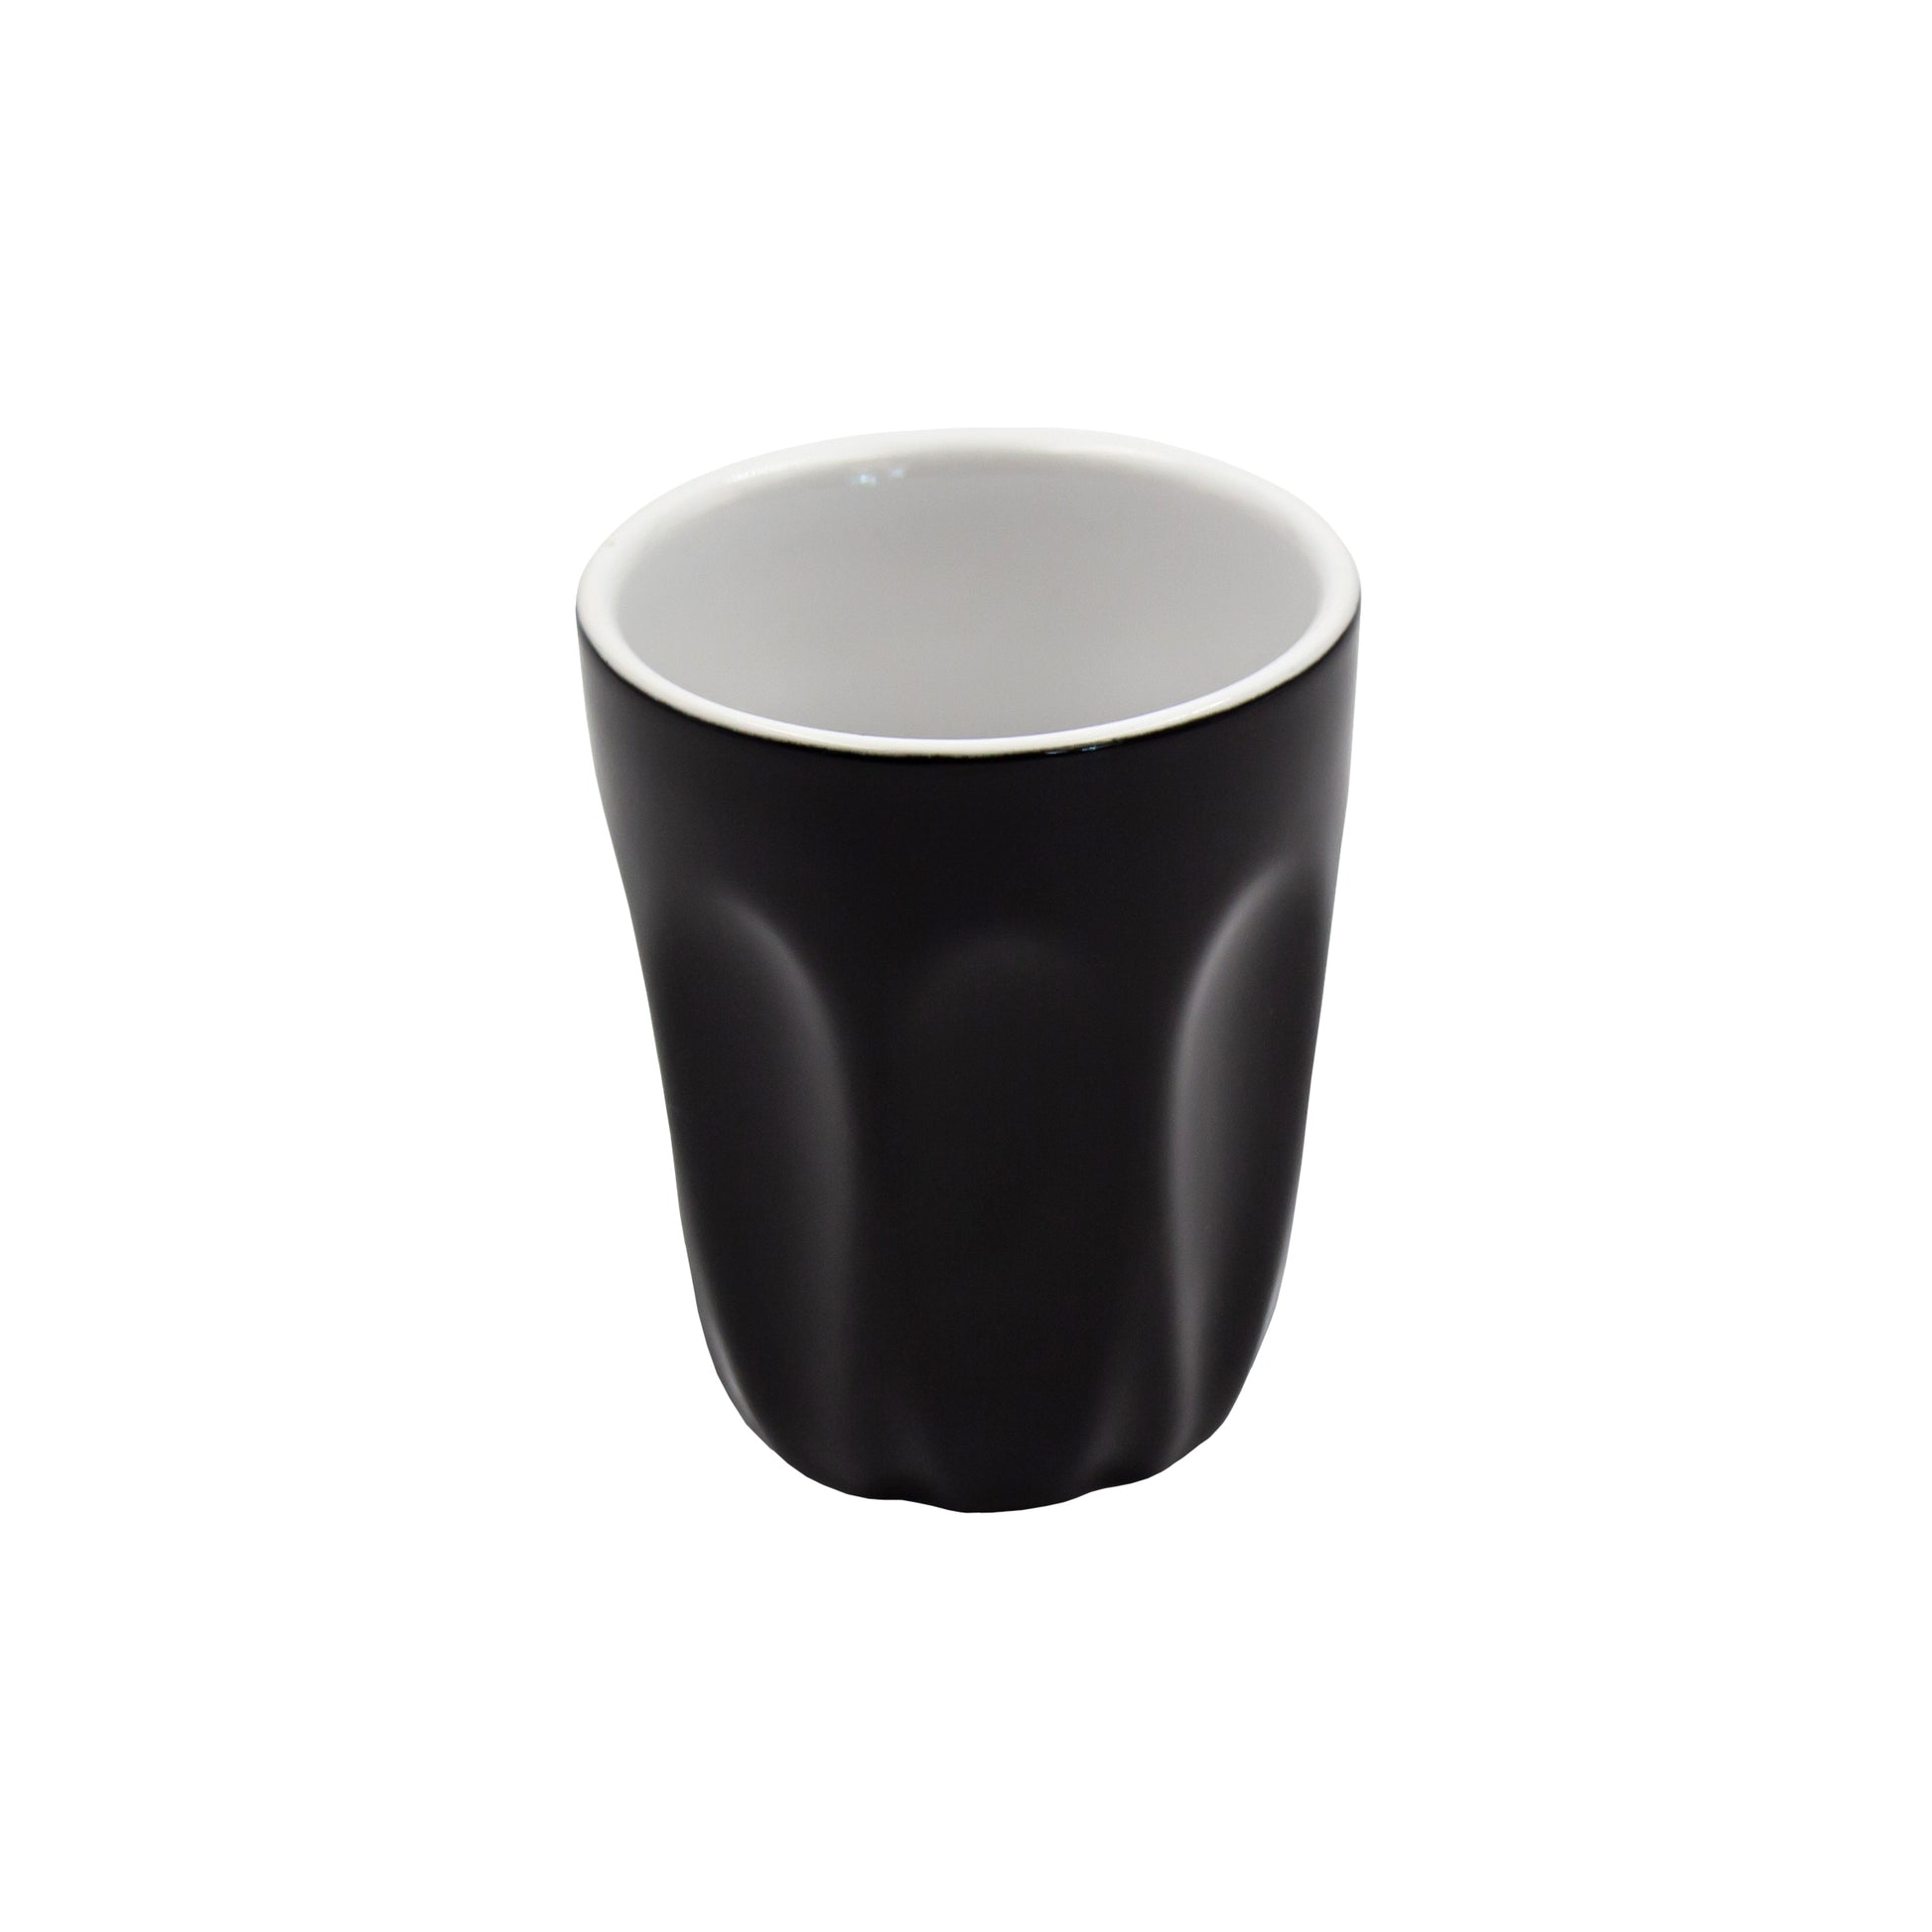 150ml black latte coffee cup